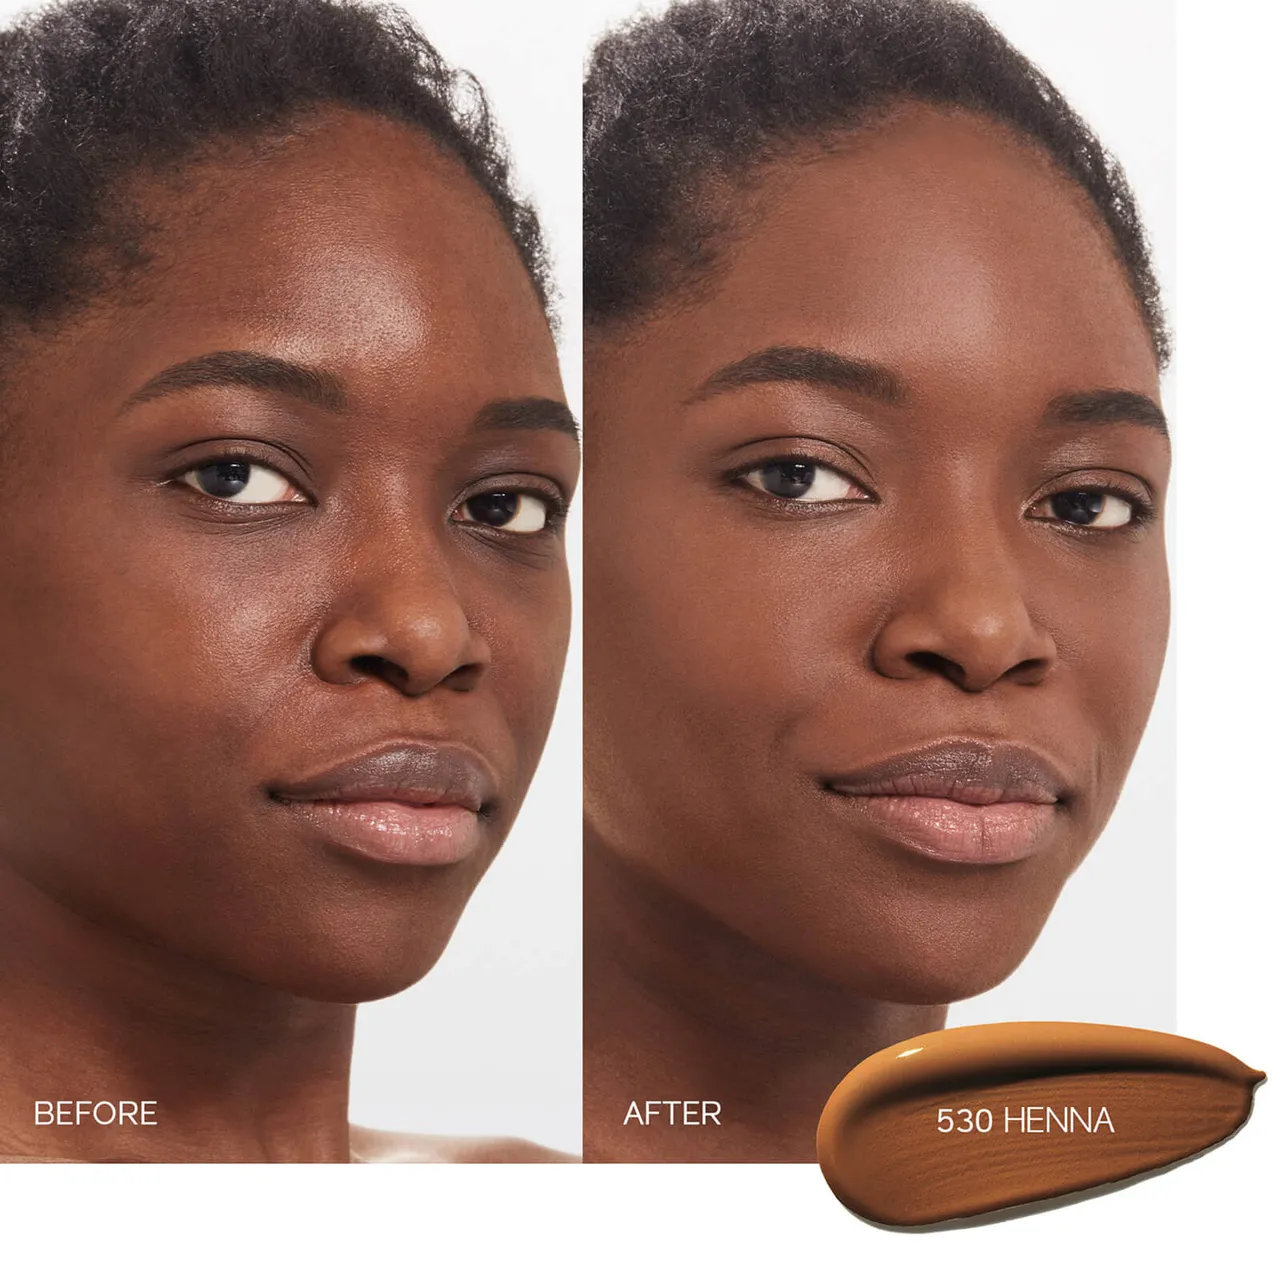 Shiseido Synchro Skin Self Refreshing Foundation 30ml (Various Shades) - 530